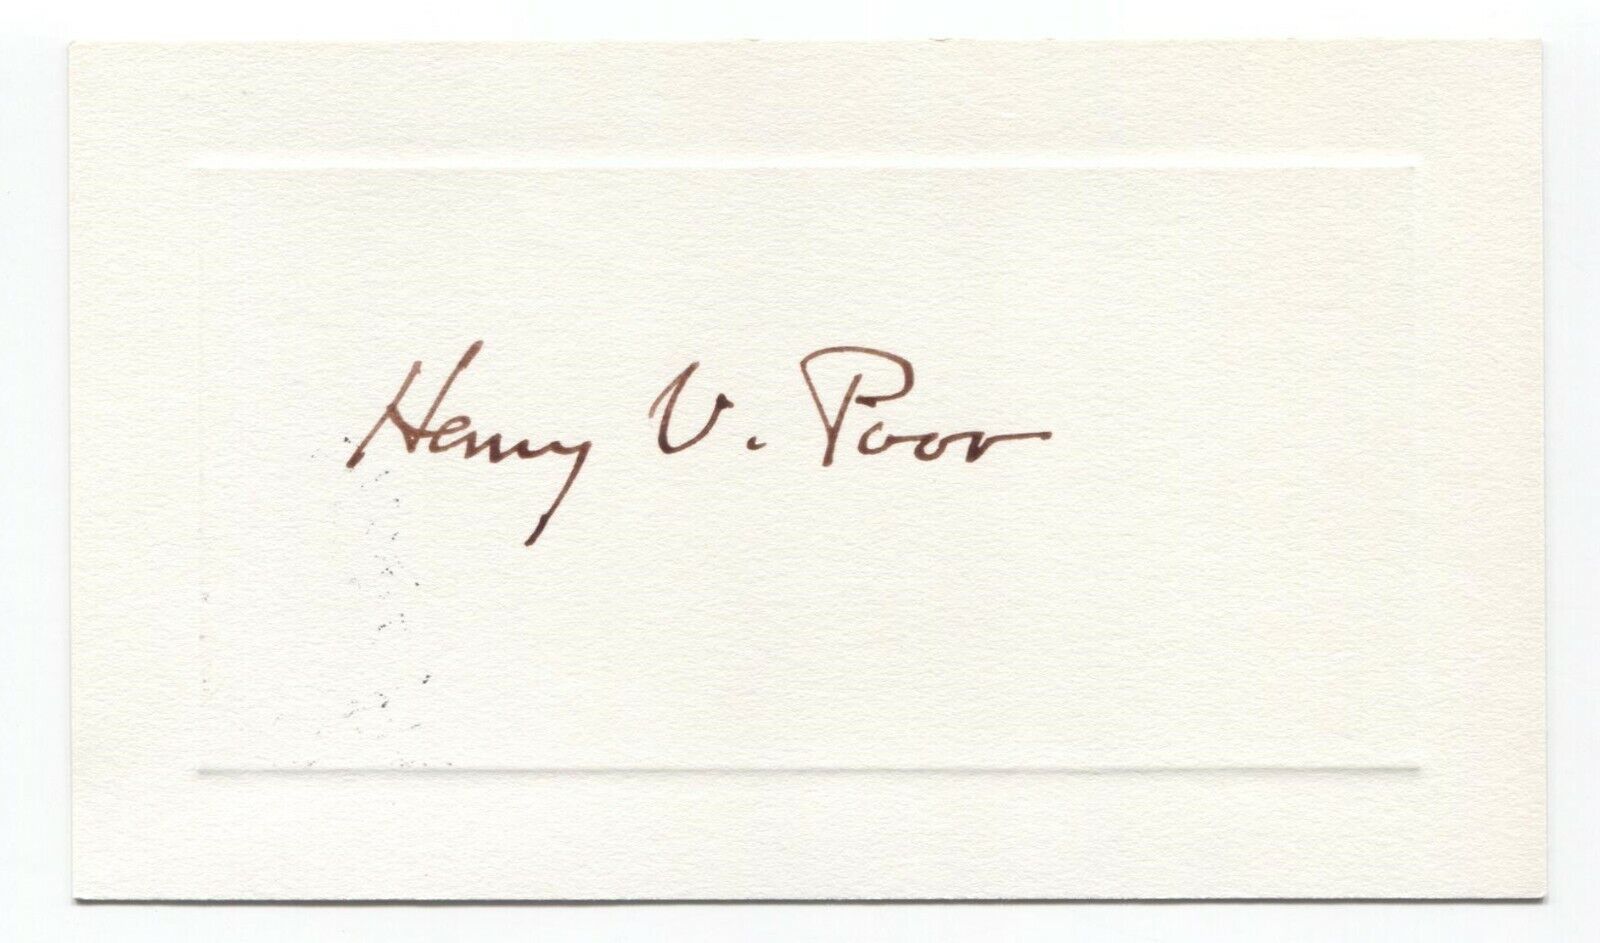 Henry Varnum Poor Signed Card Autographed Signature Artist Architect Designer